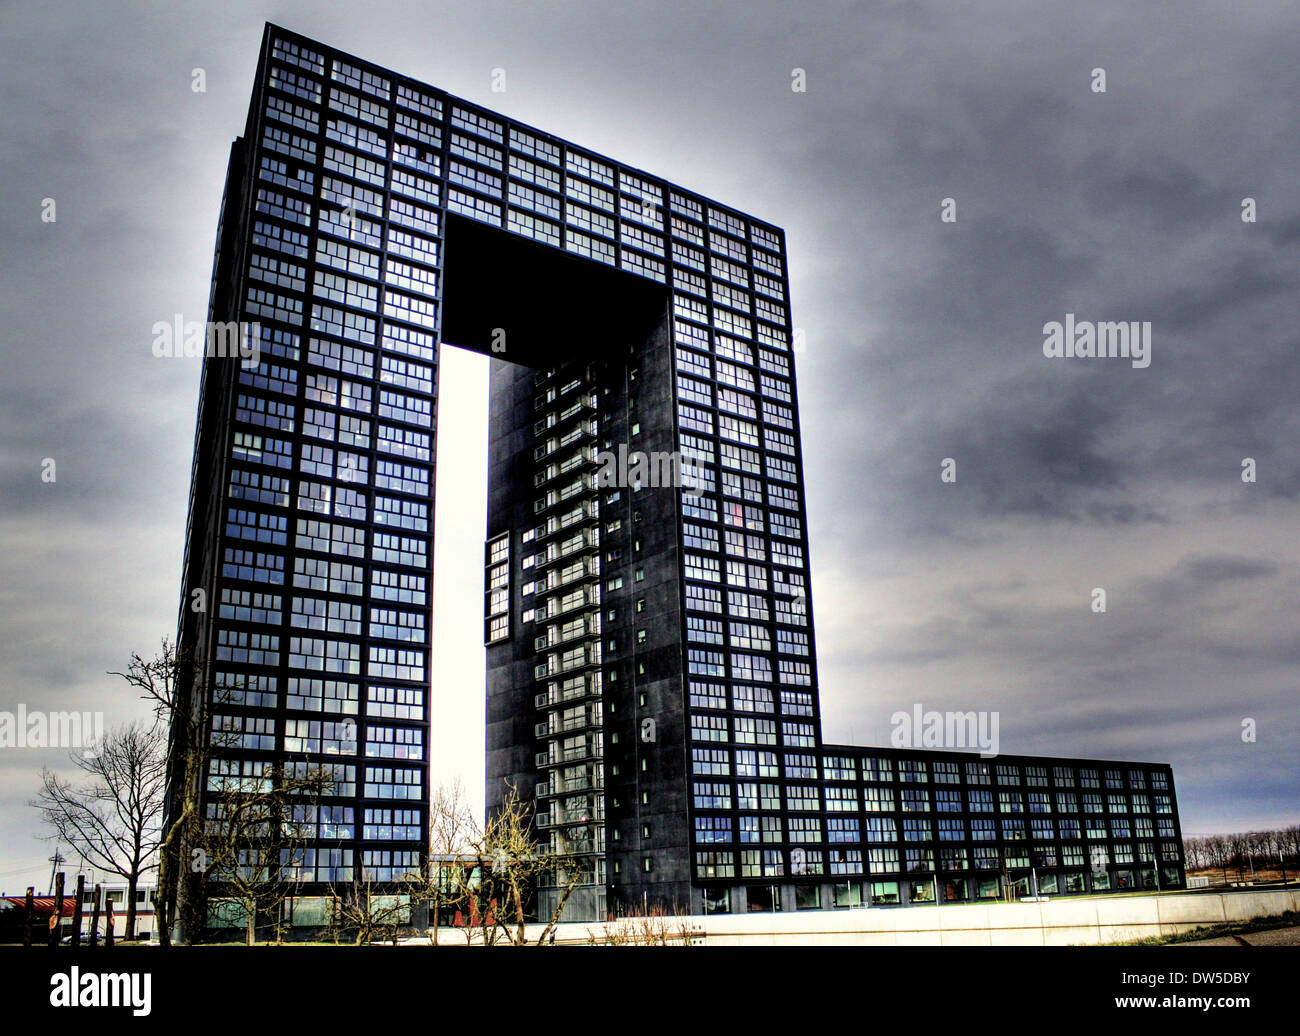 L'architecture moderne : Tasmantoren, Groningen, Pays-Bas Banque D'Images